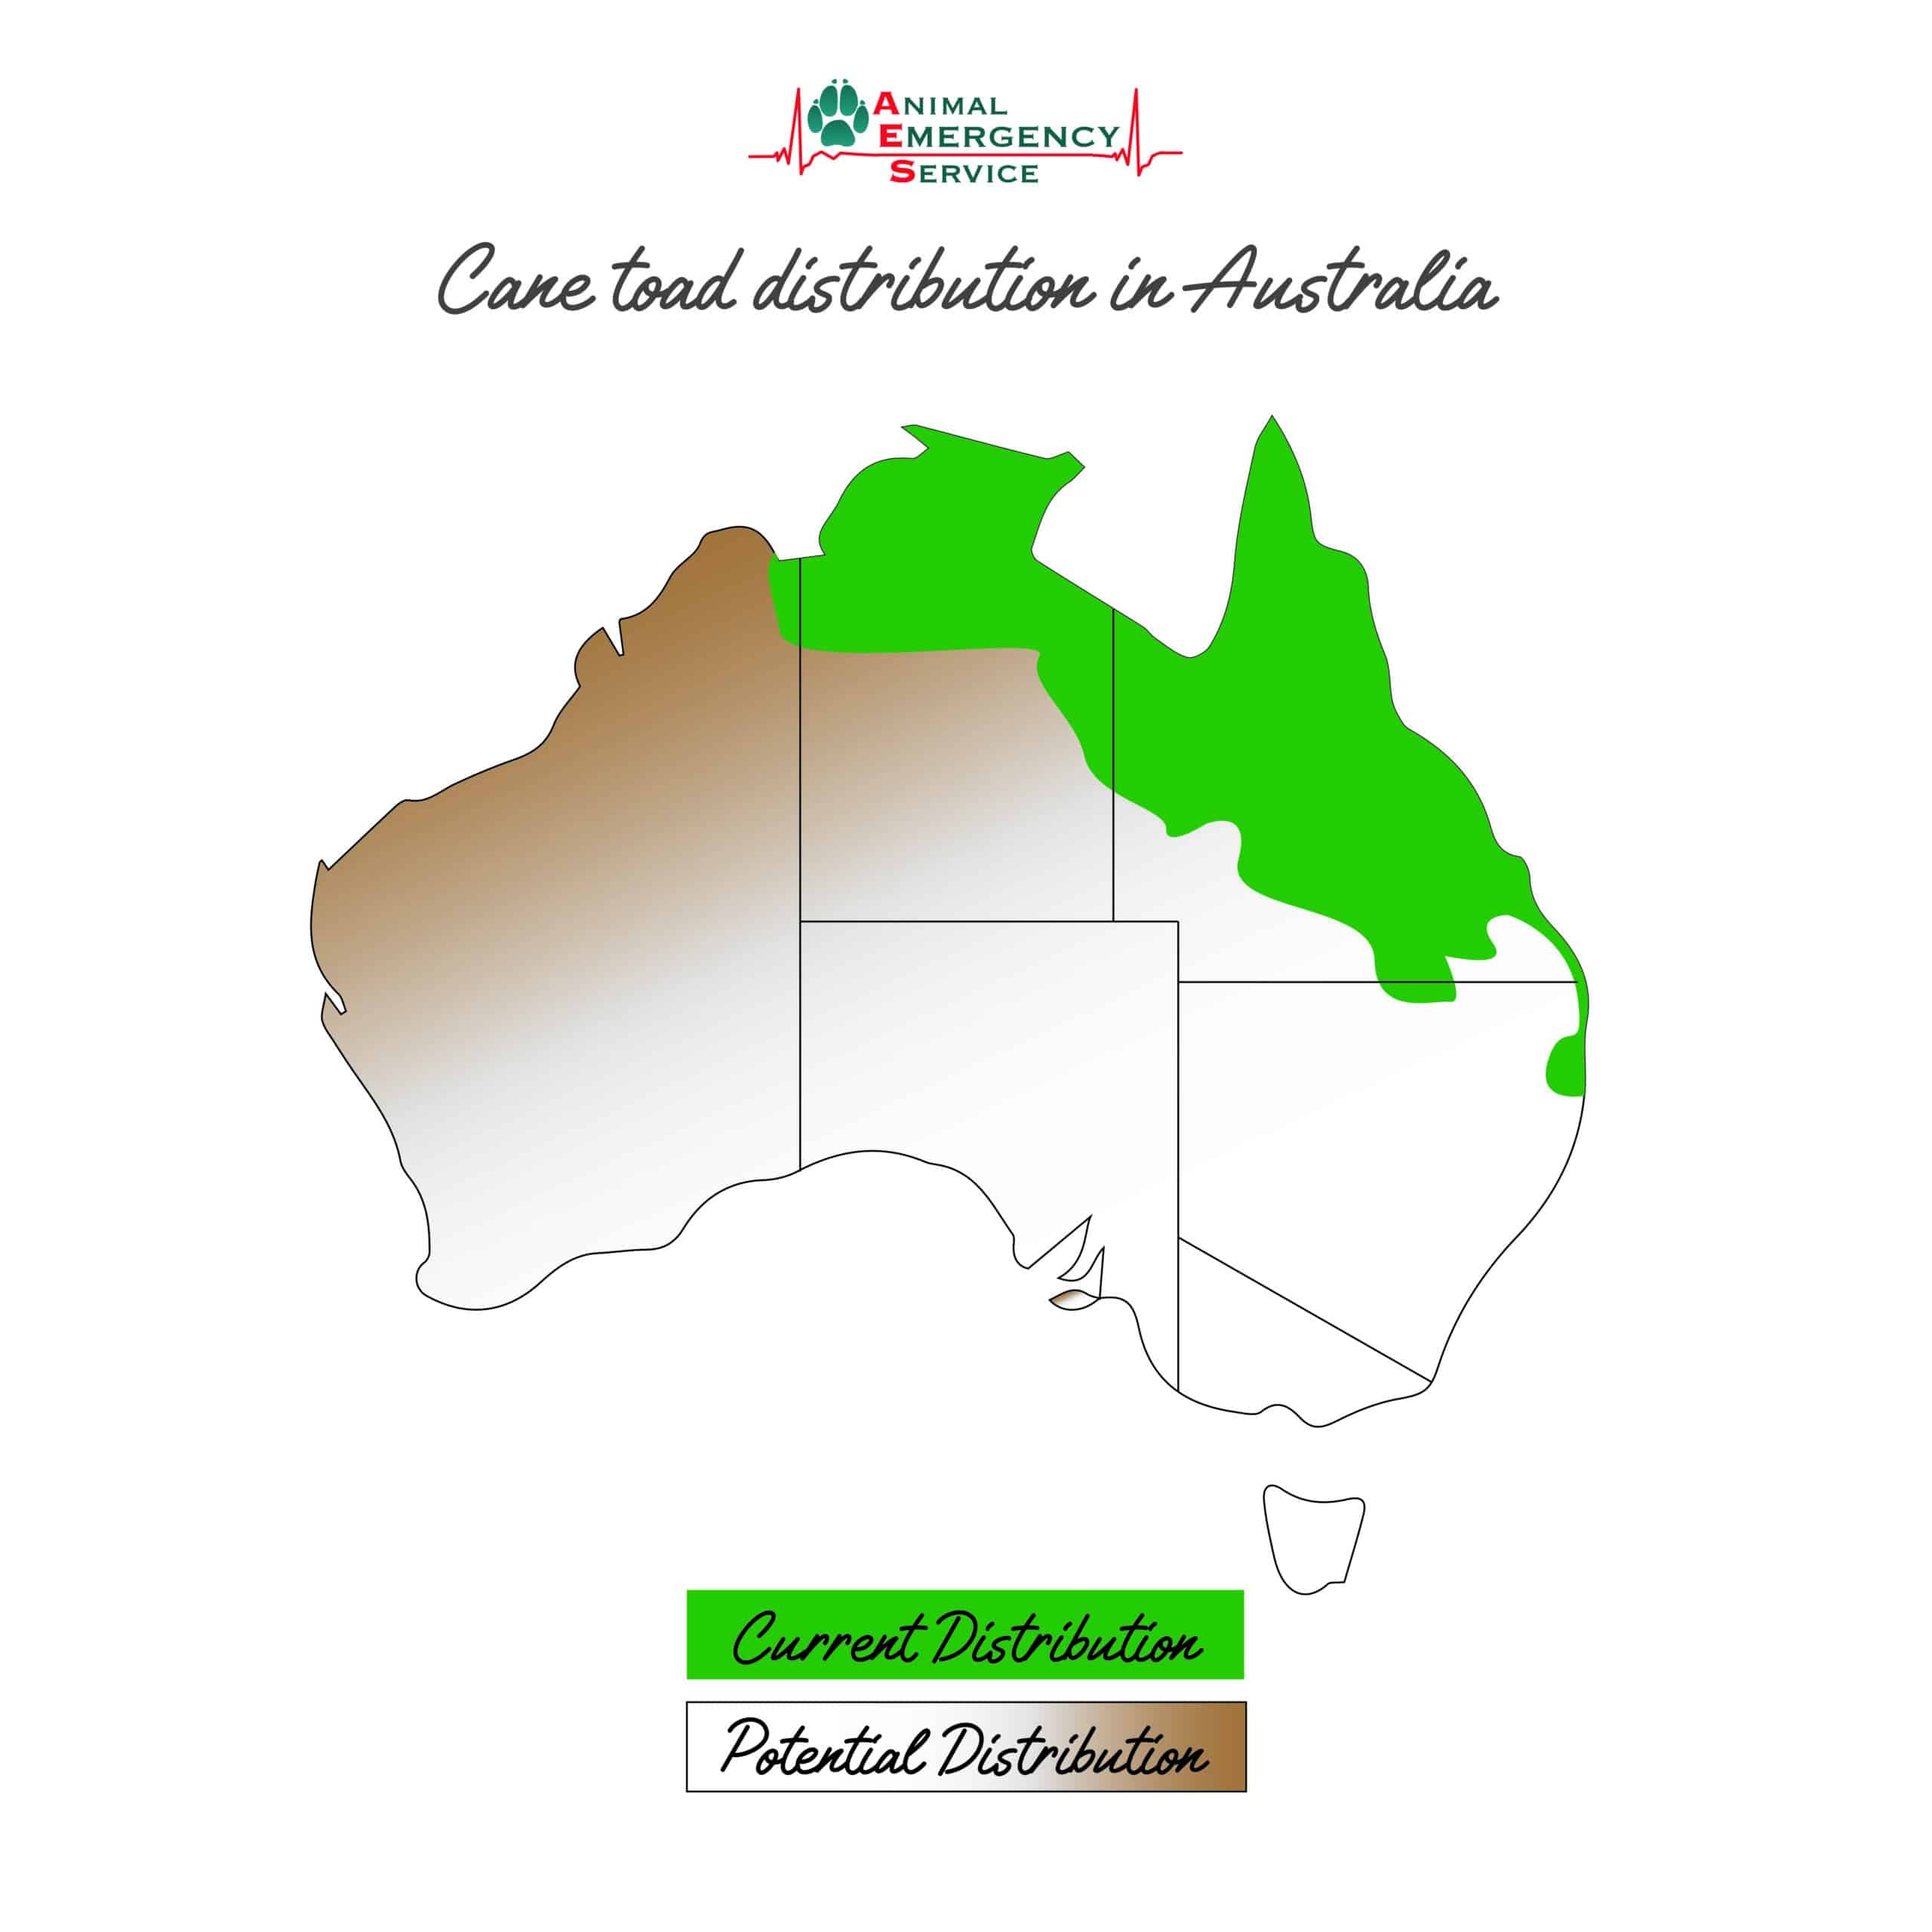 Cane toad distribution in Australia